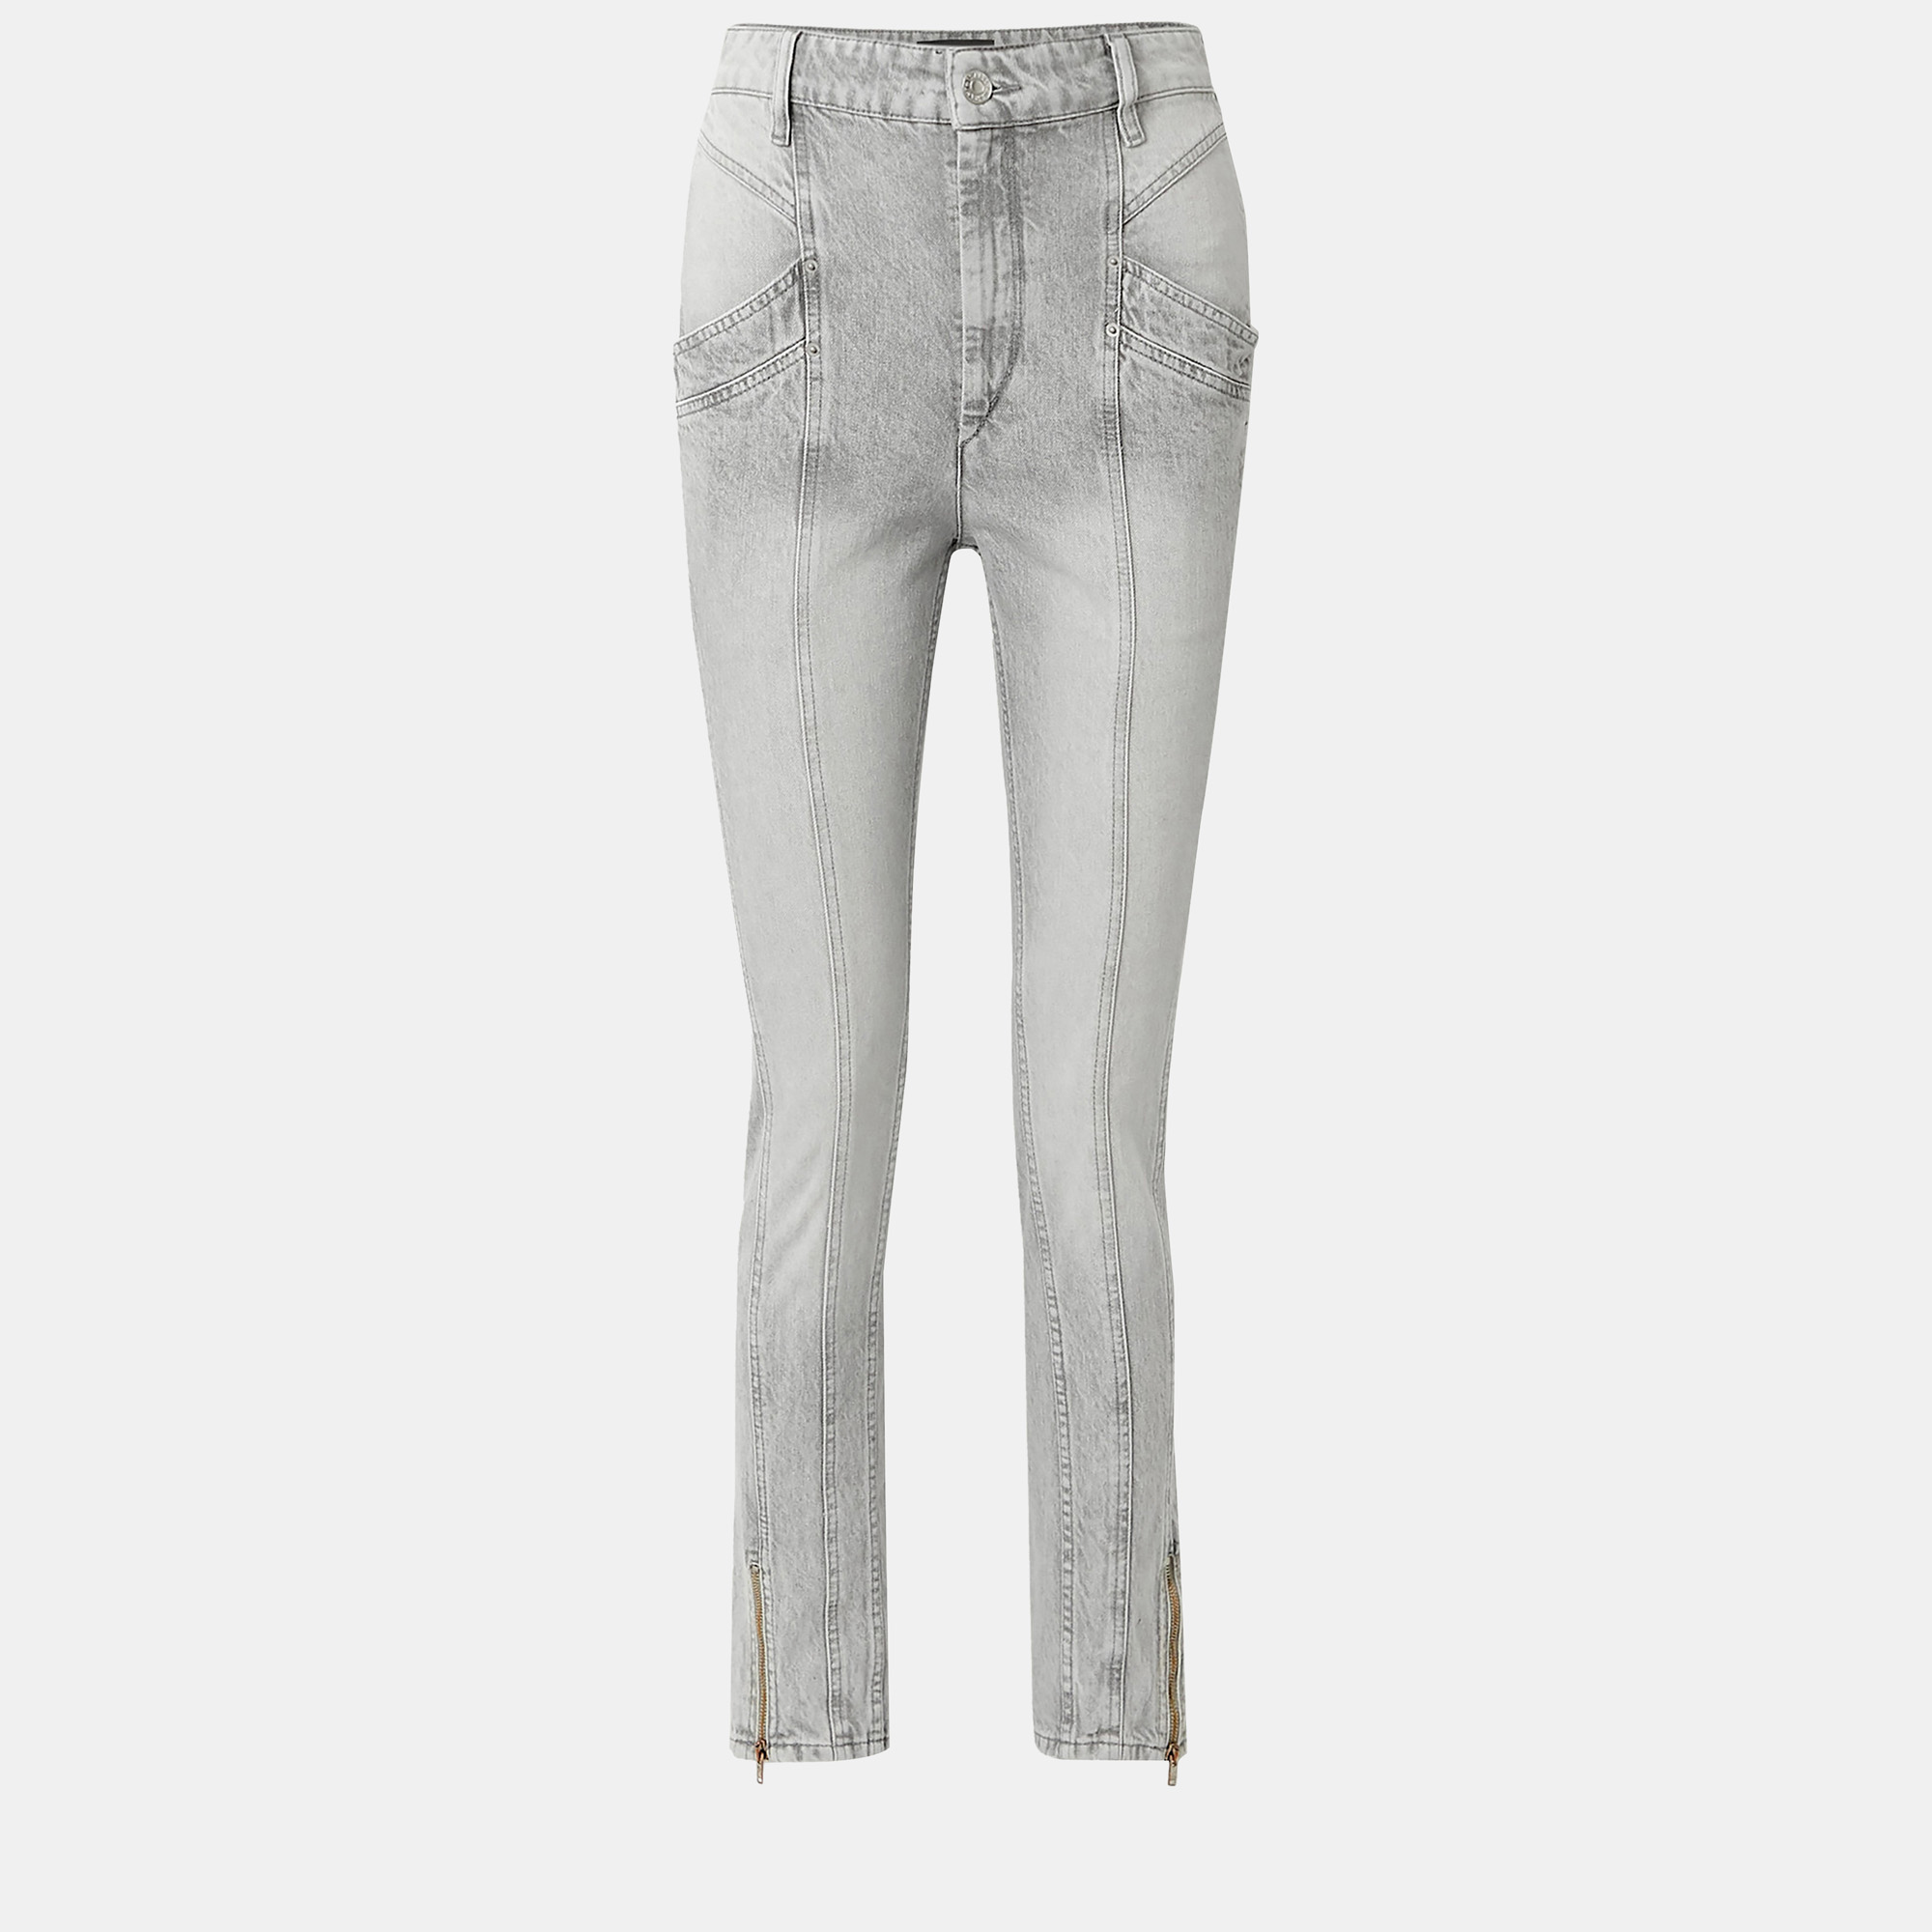 Isabel marant cotton skinny leg jeans 36